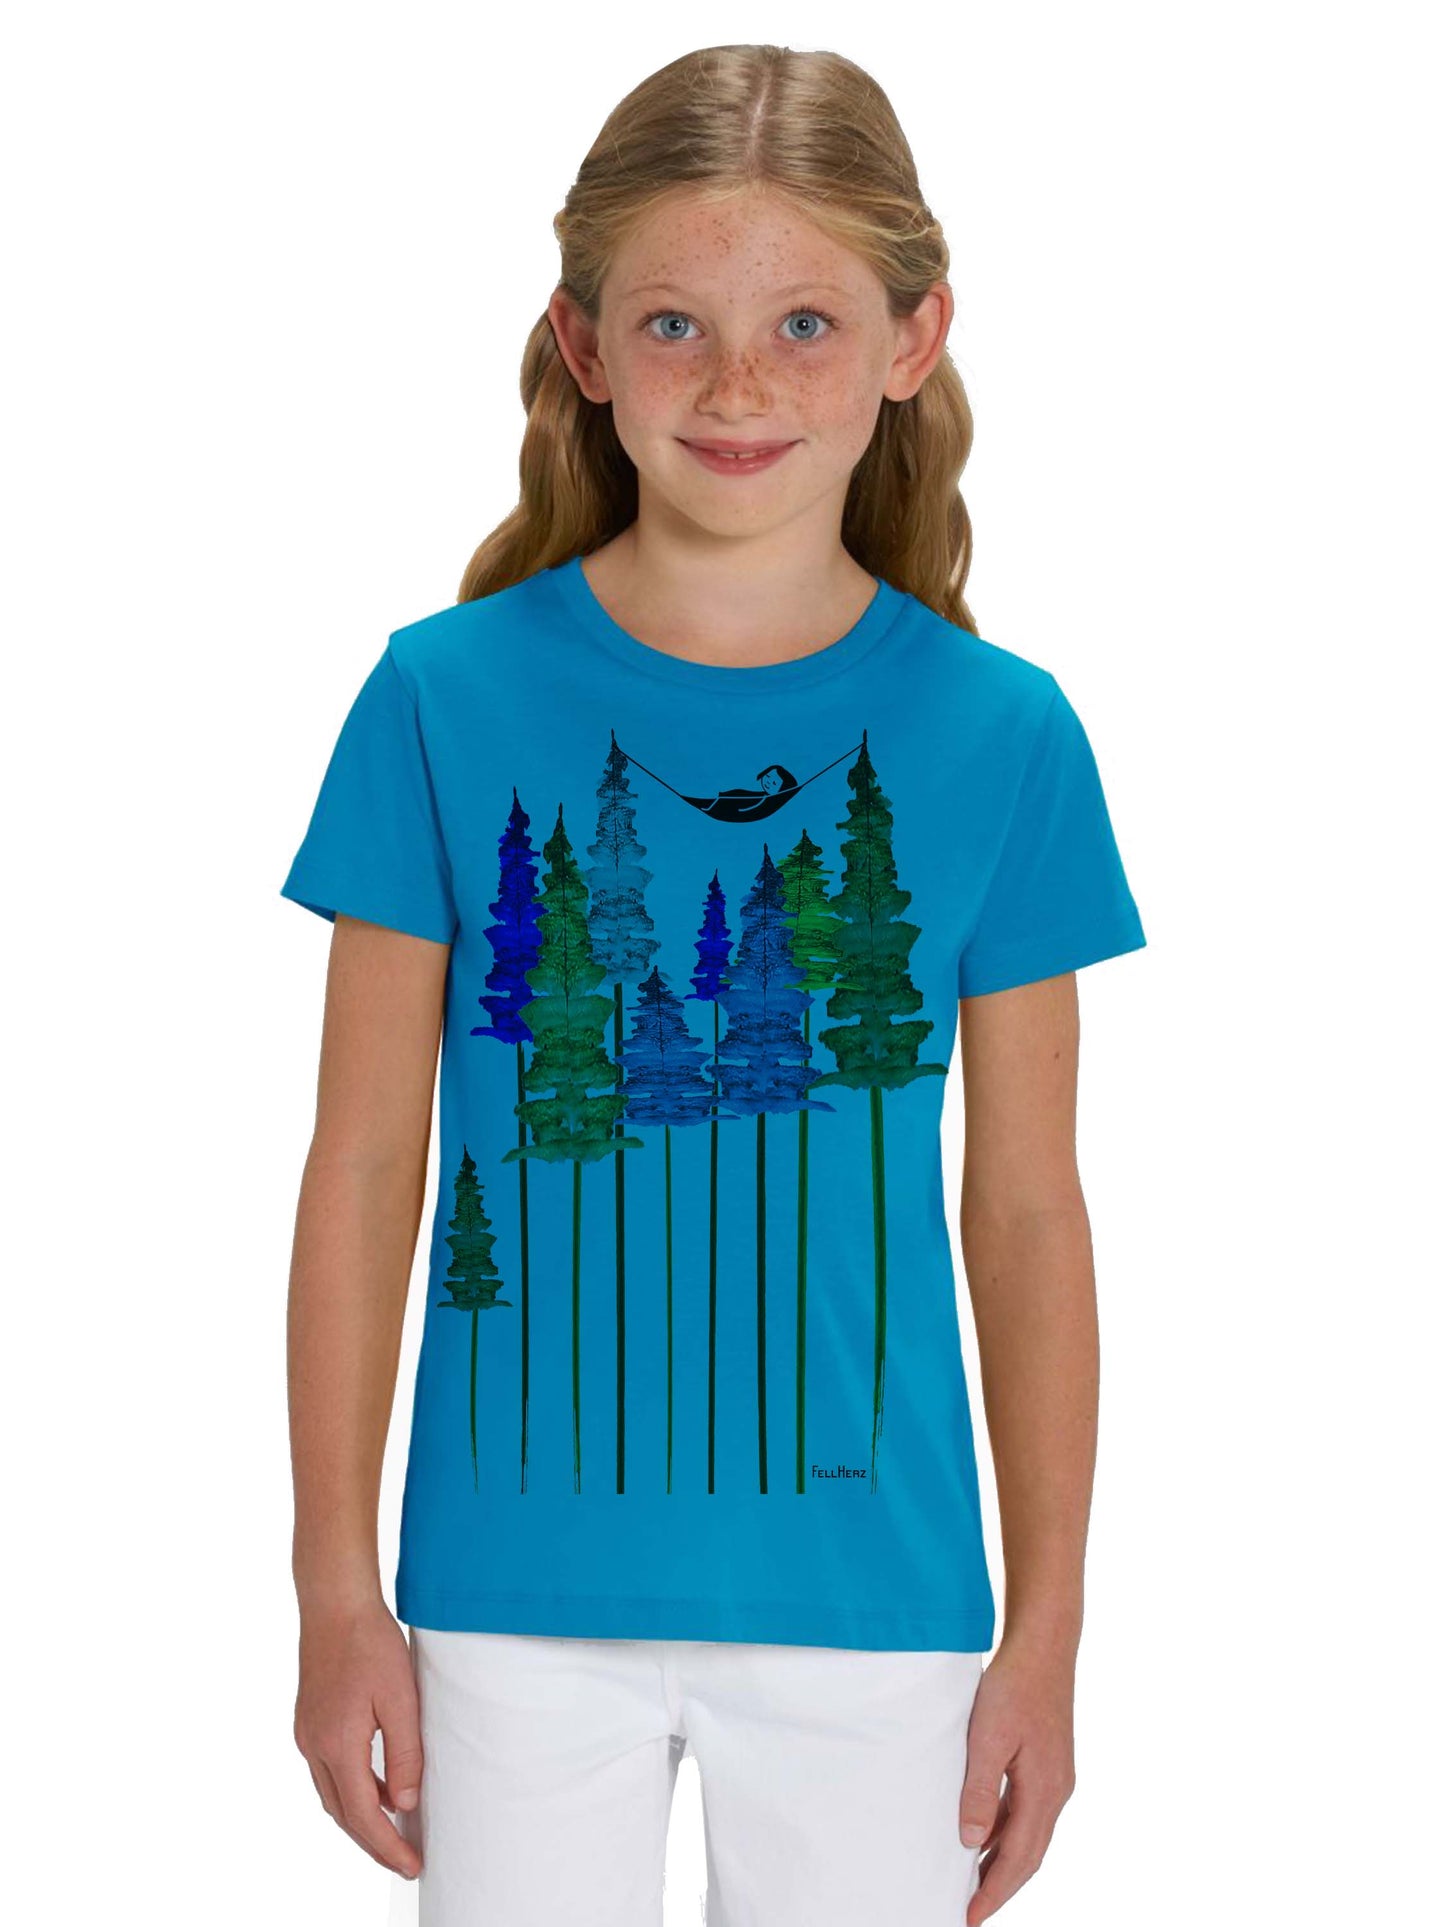 Wood Girl Kids T-Shirt azur